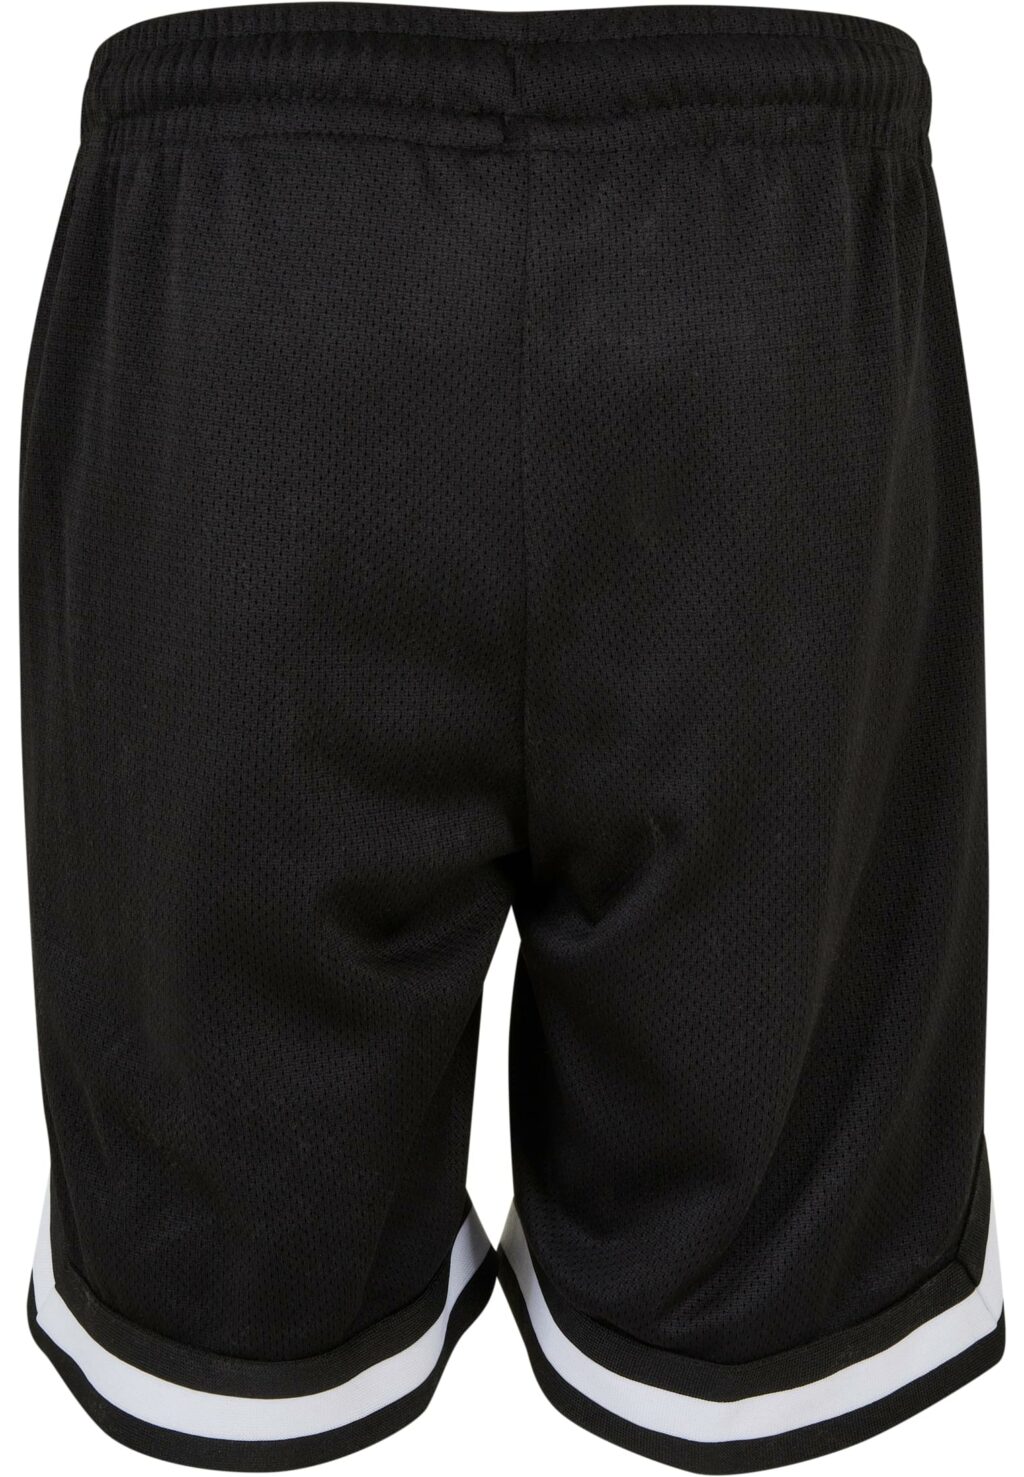 Boys Stripes Mesh Shorts black UCK243